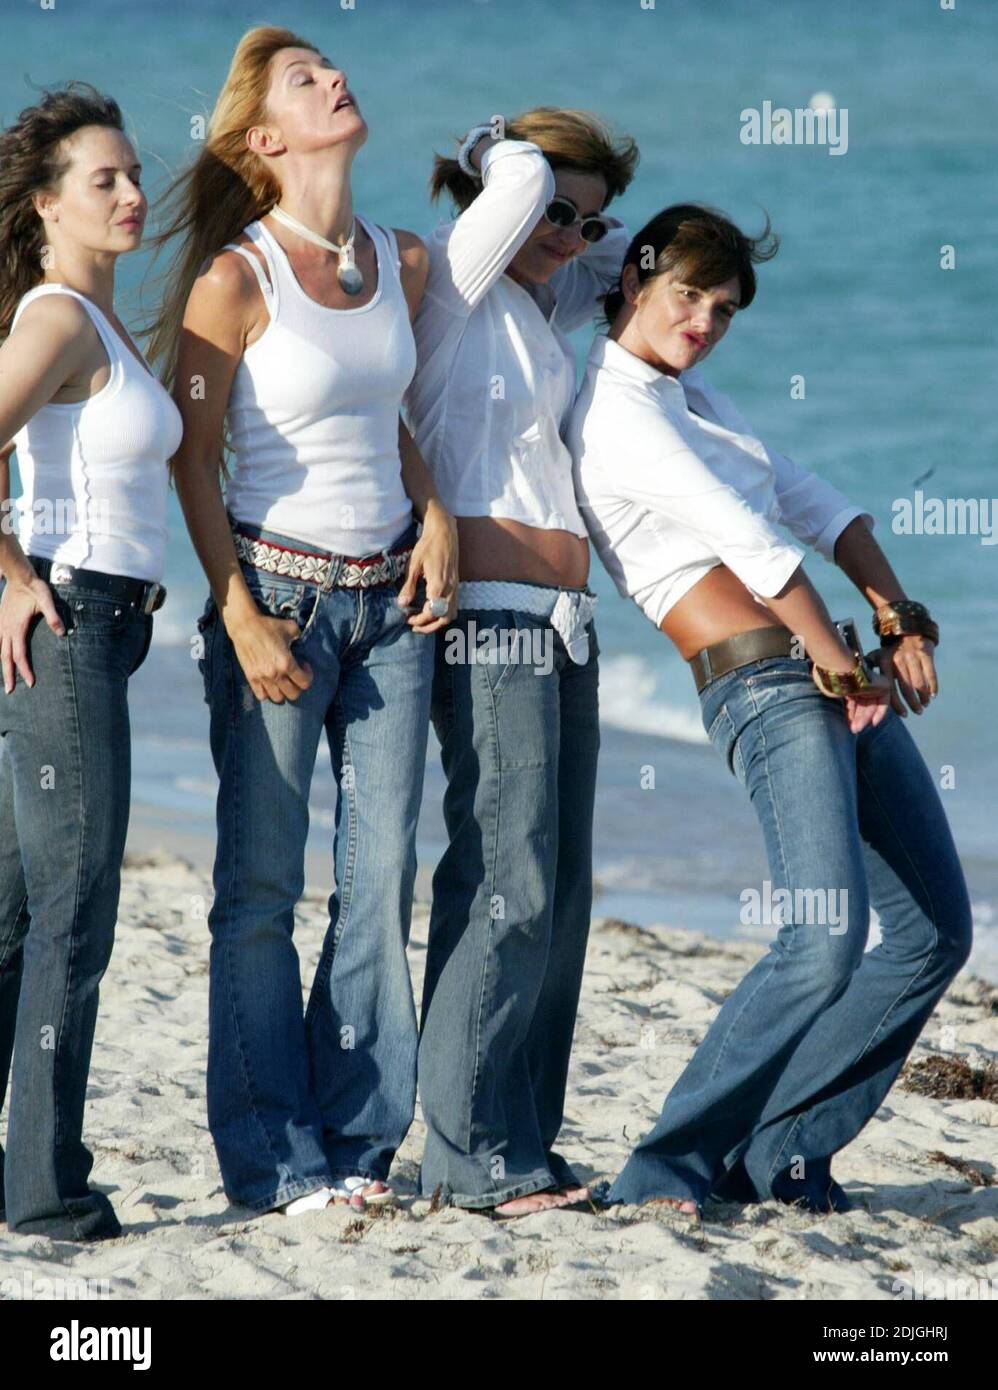 Exclusive!! Araceli Gonzalez, Carola Reyna, Gabriela Toscano and Mercedes Moran from Argentinian TV program 'Housewives', pose for a photo shoot on Miami Beach, FL, 2/23/06 Stock Photo